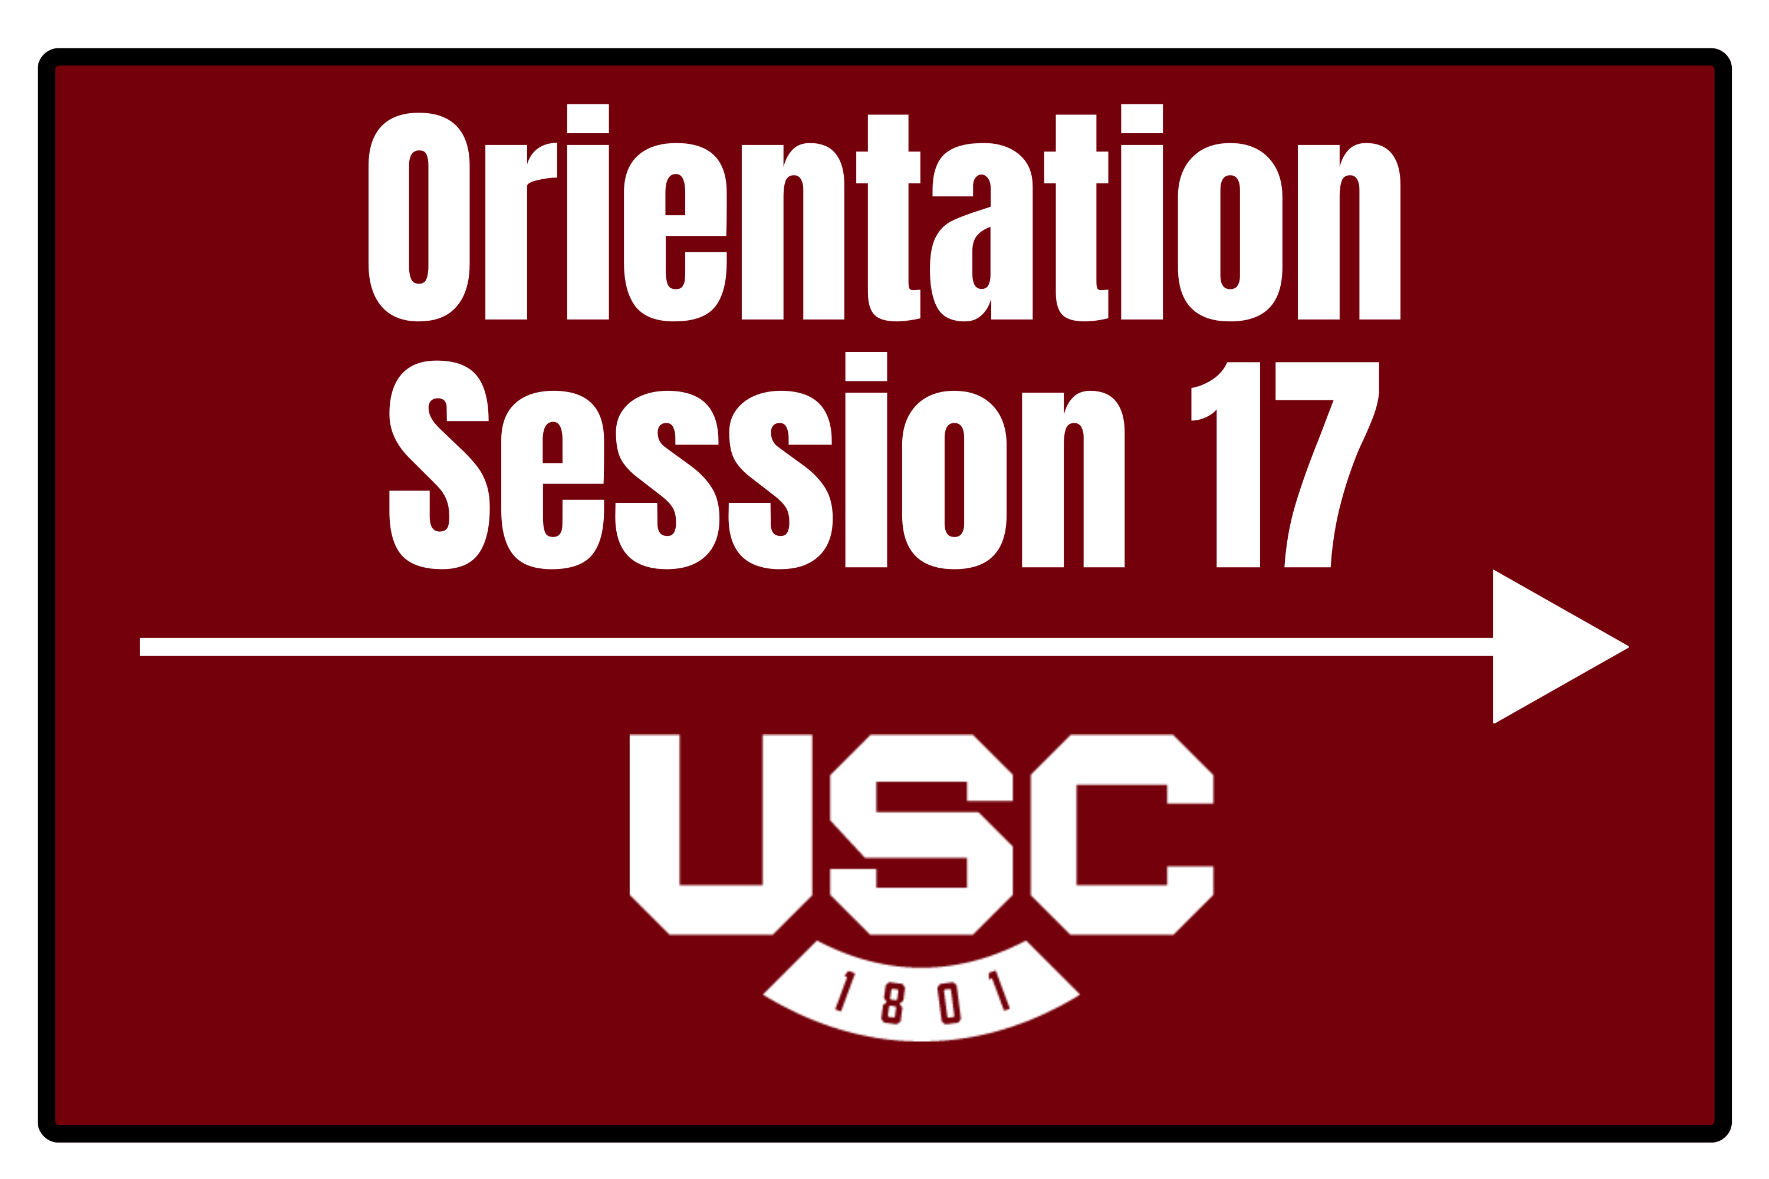 Orientation Session 17: July 24 - 25